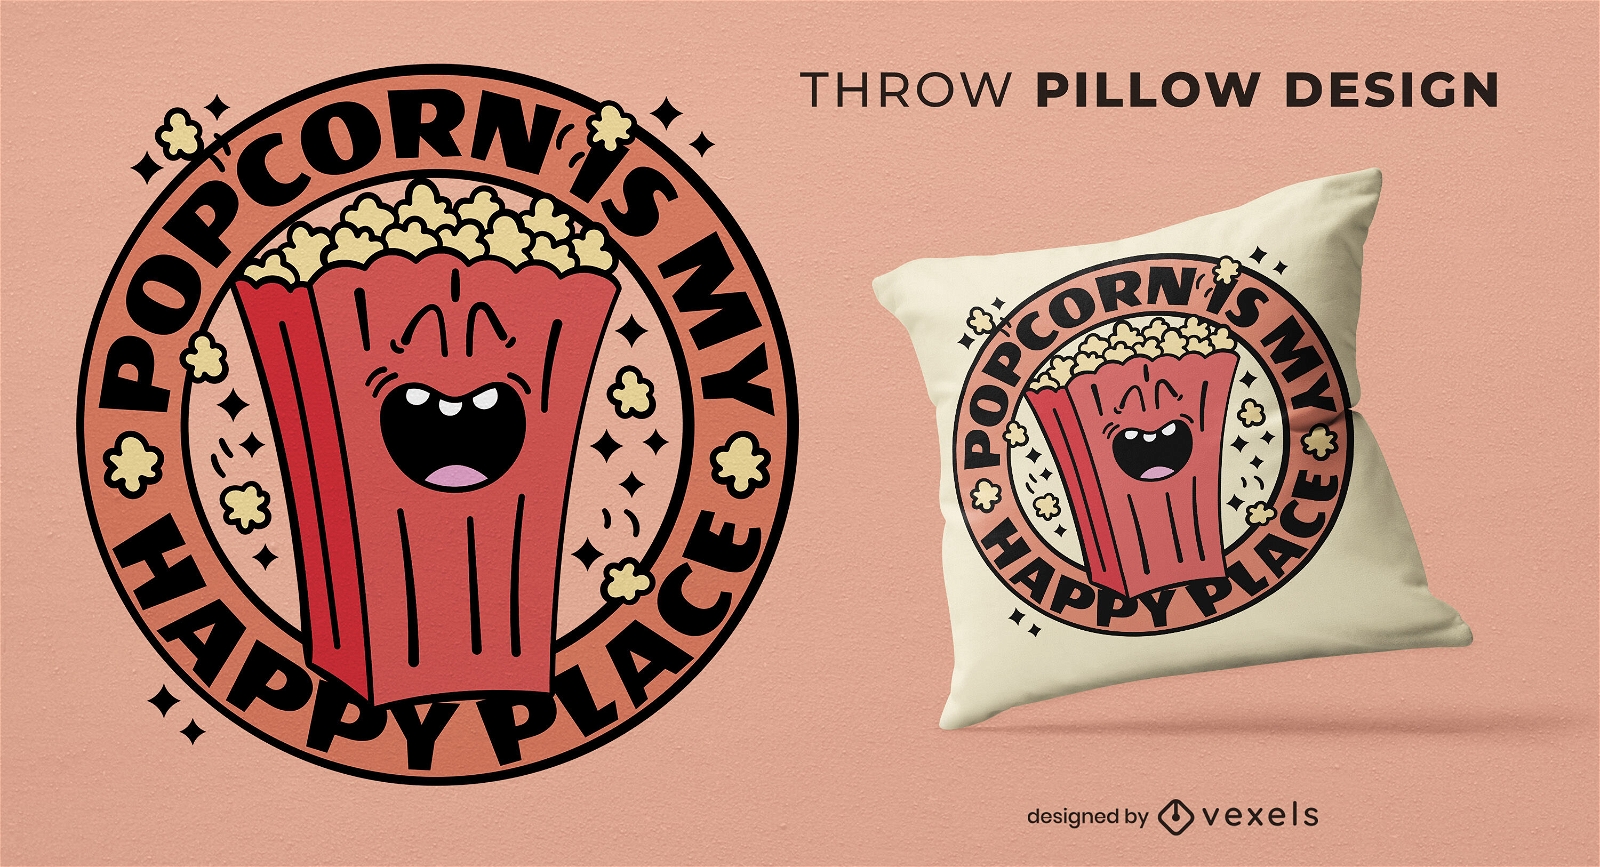 Popcorn joy throw pillow design